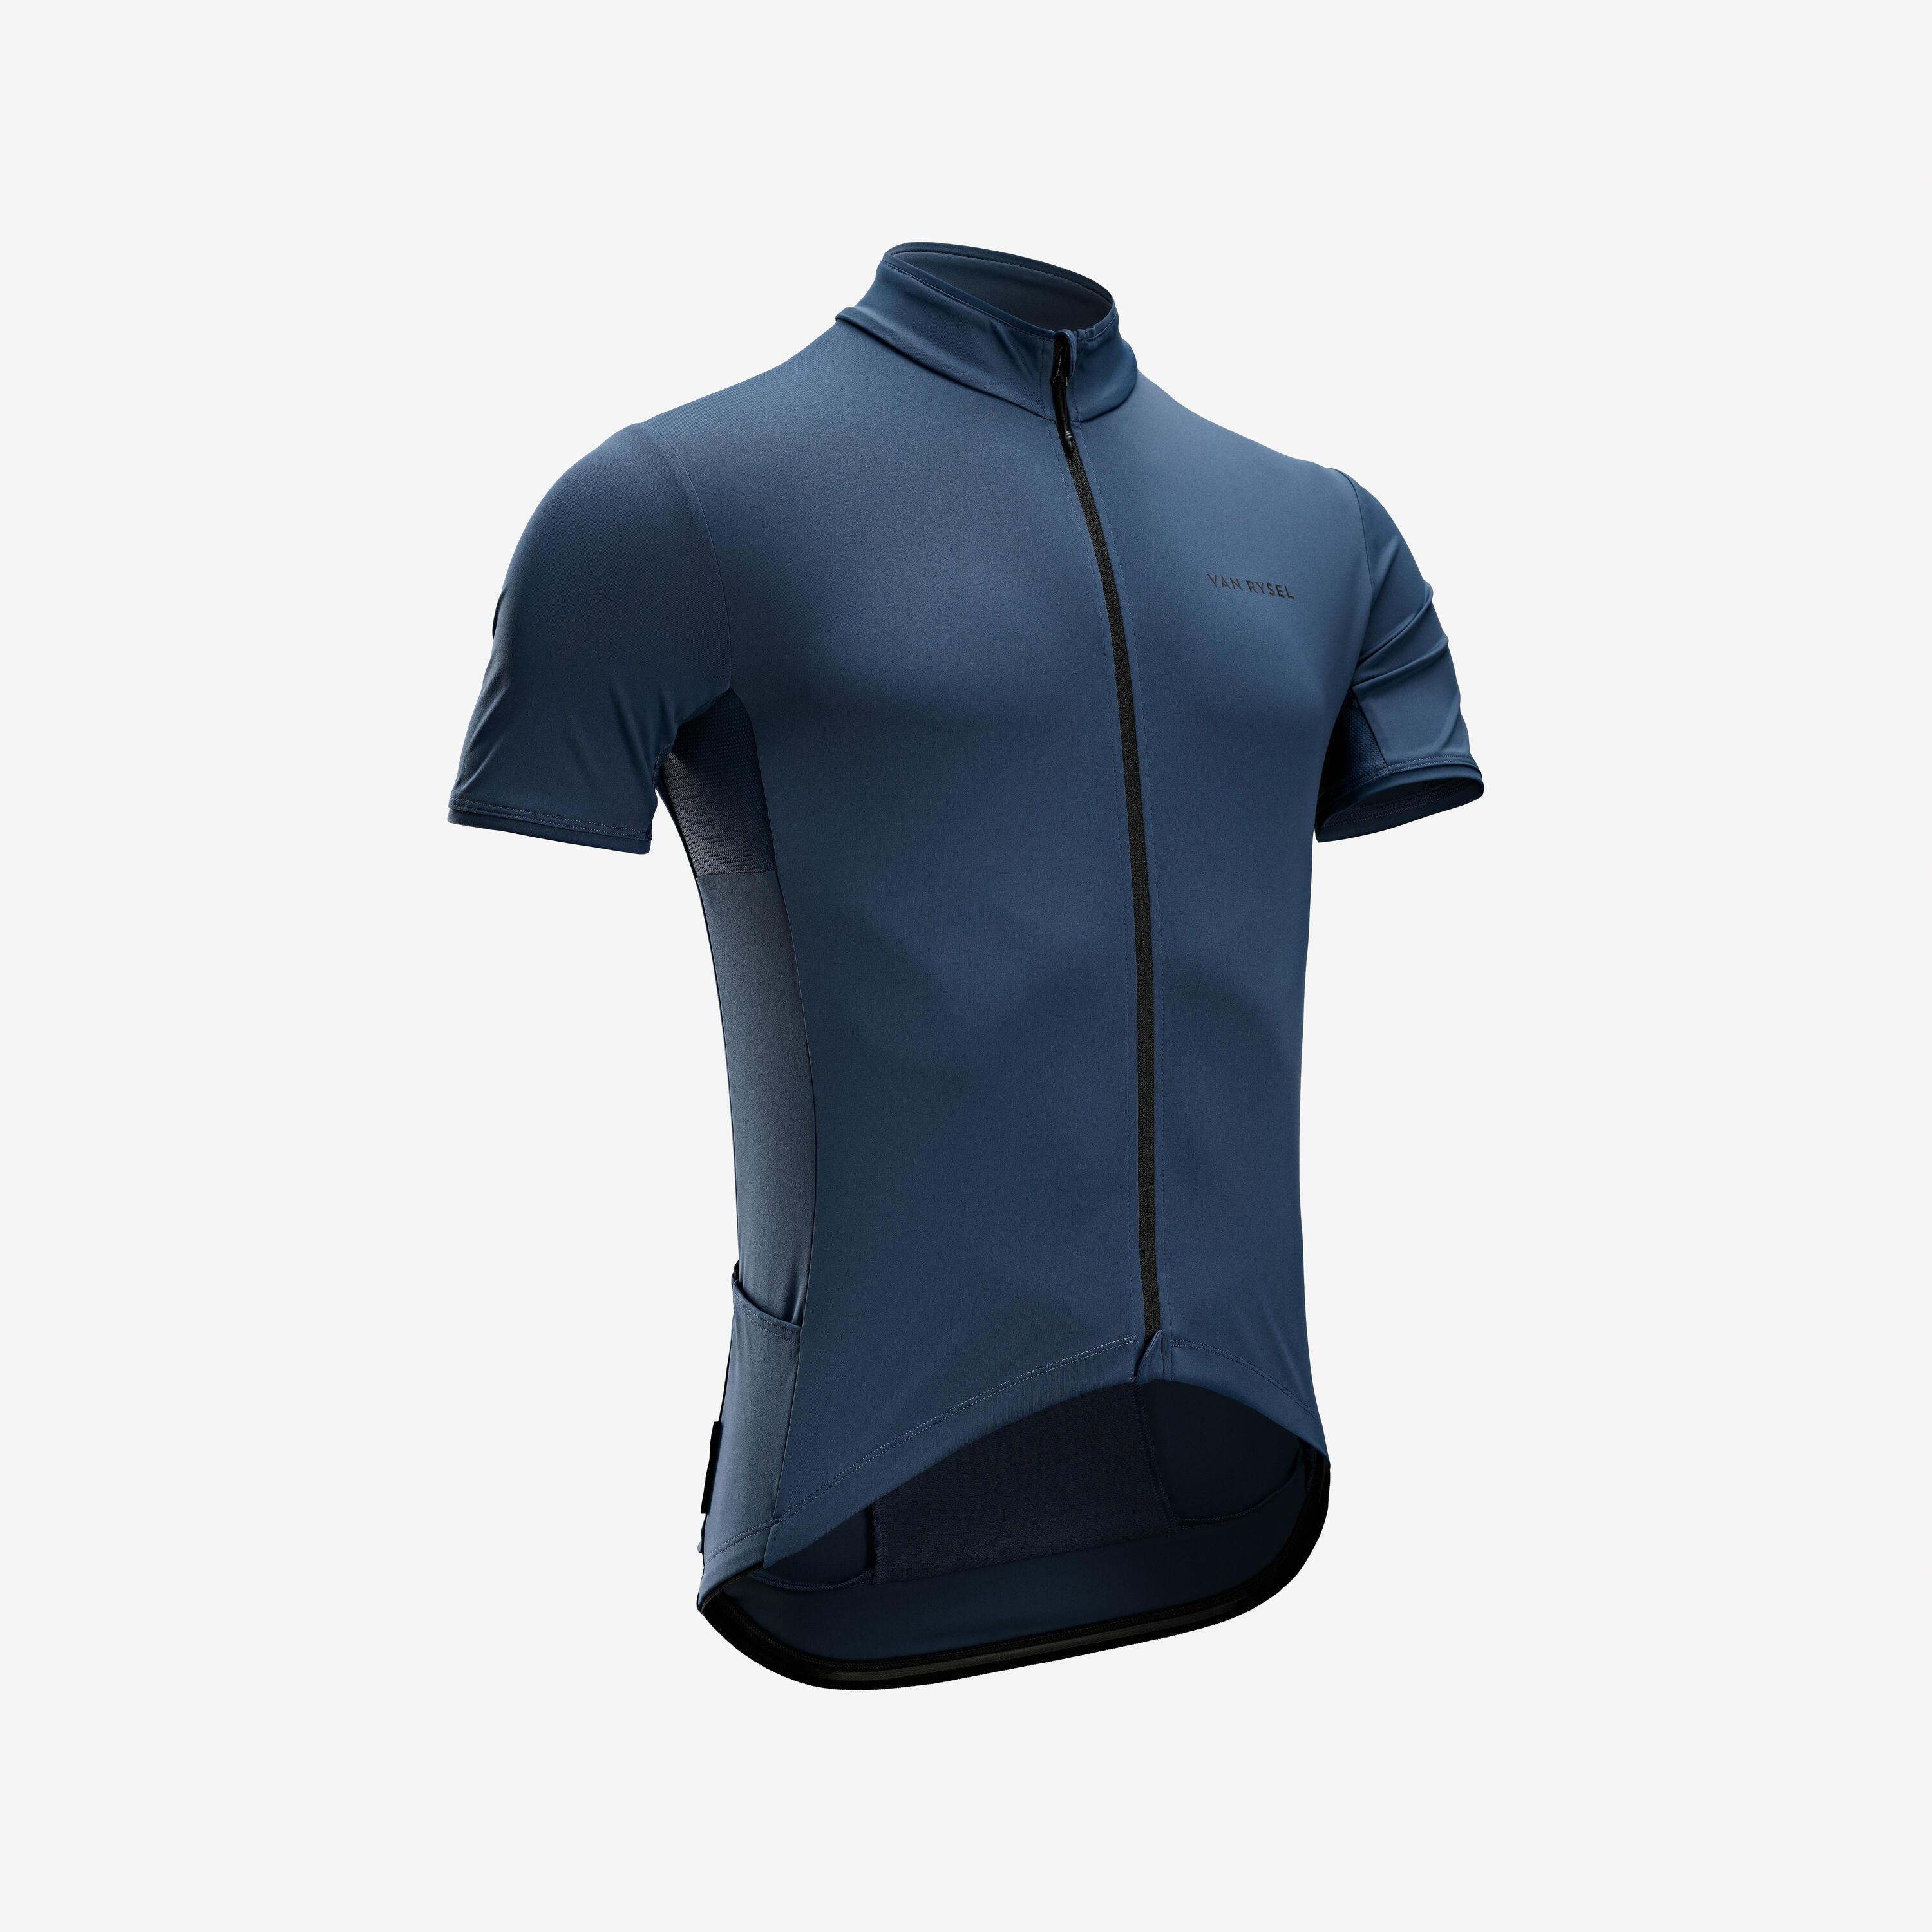 Men's Road Cycling Short-Sleeved Summer Jersey Endurance - Slate Blue 2/6